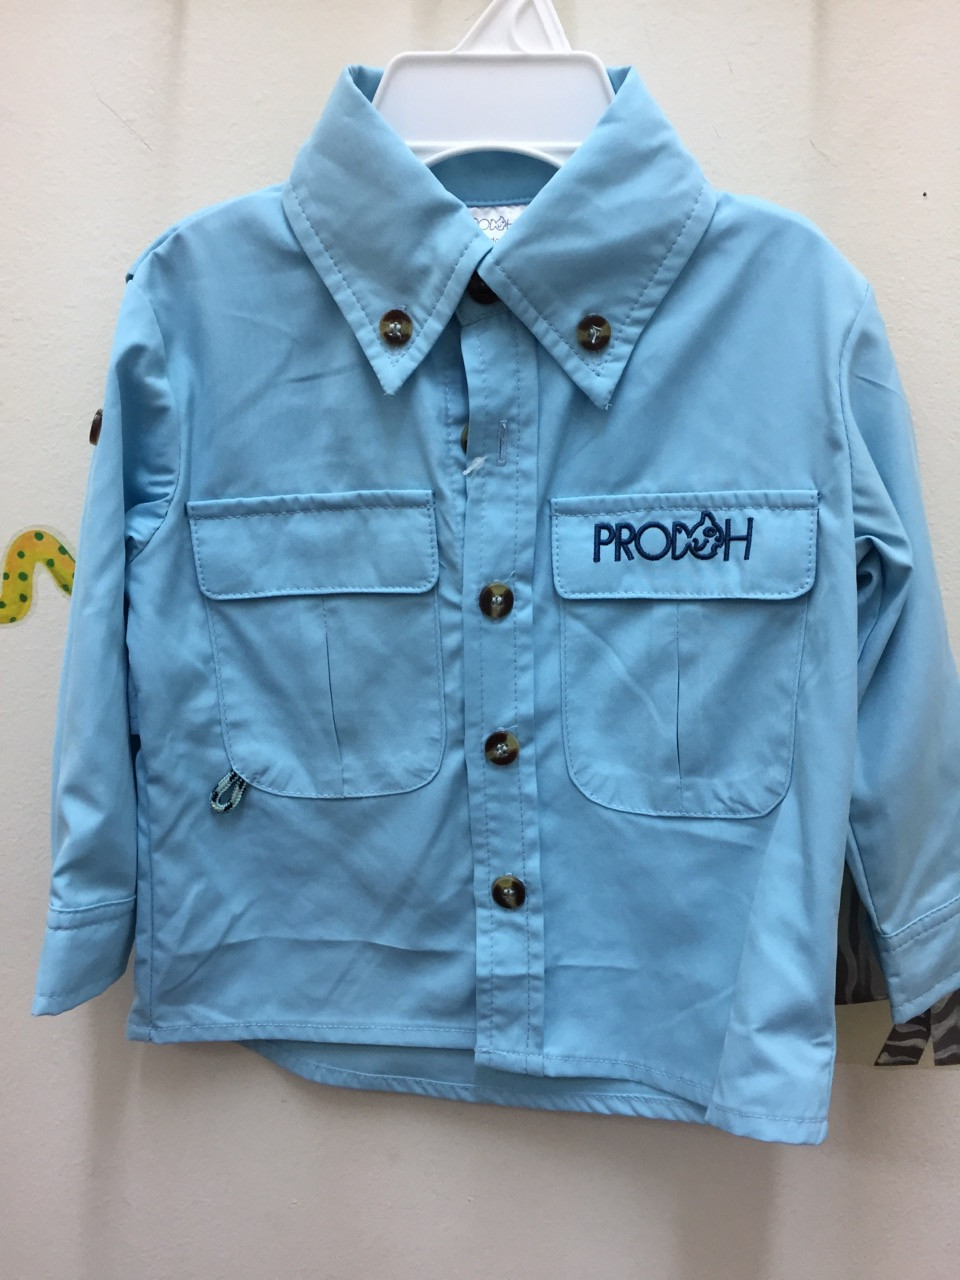 Prodoh Kids Vented Back Seasonal Fishing Shirt - klassy kids